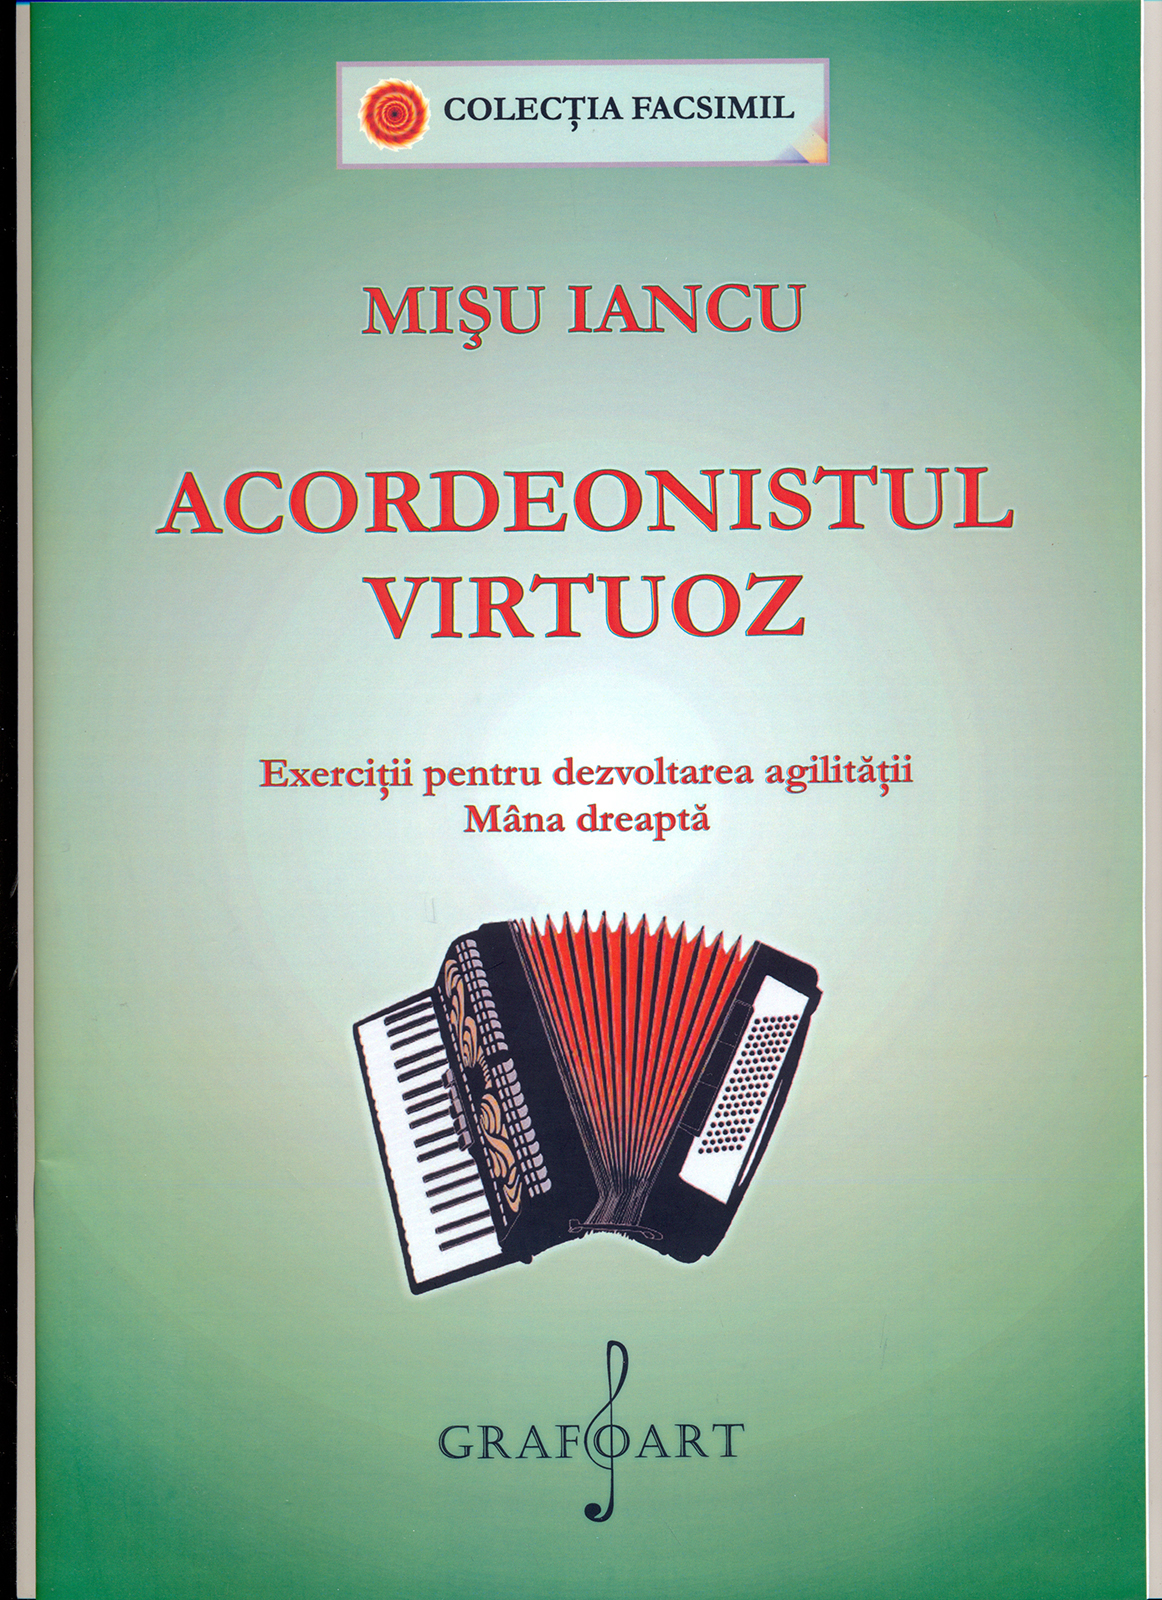 Acordeonistul virtuoz | Misu Iancu carturesti.ro